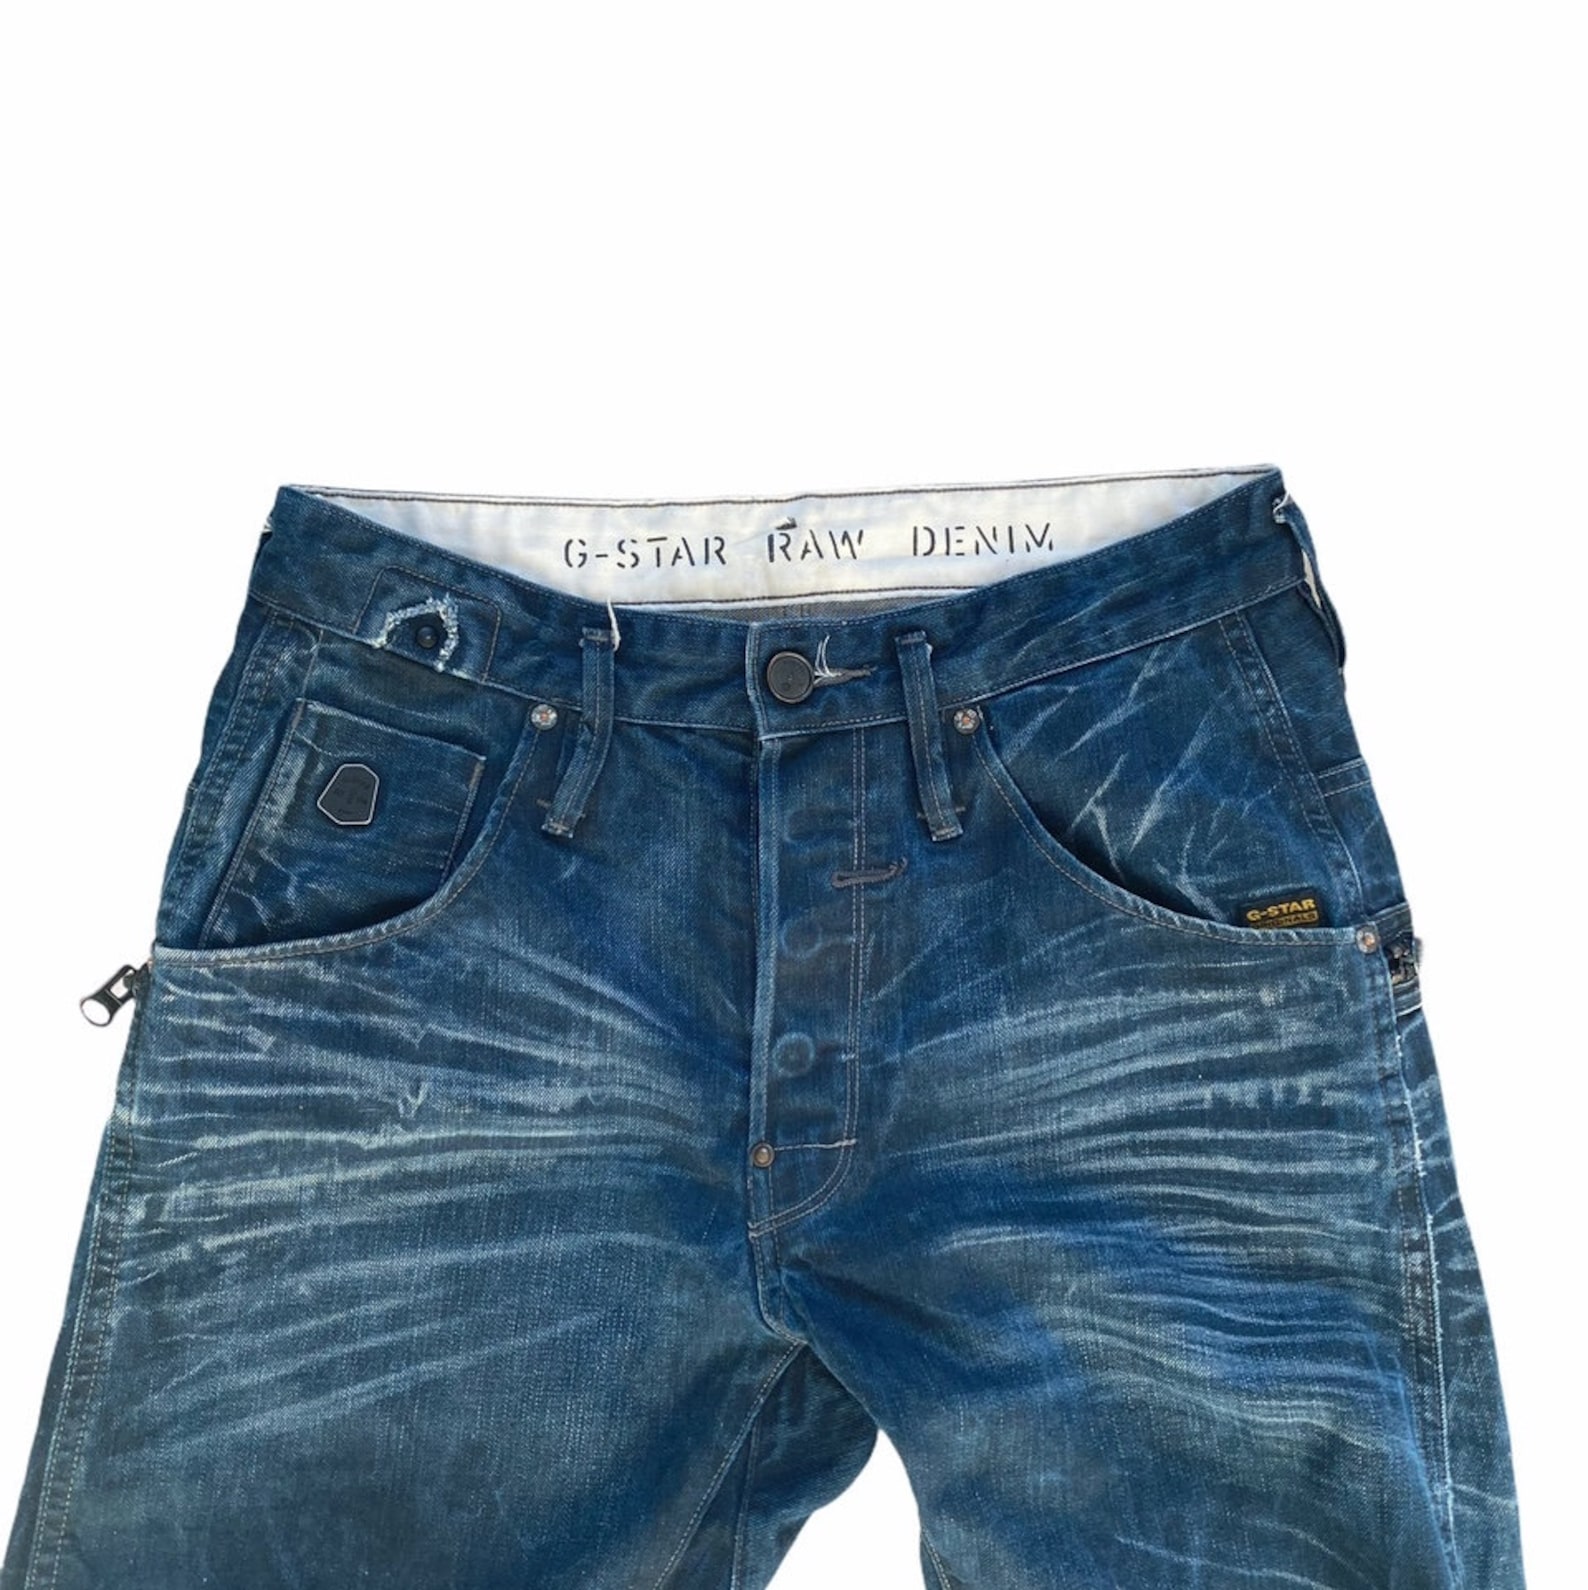 Y2K Early 2000s G-star Acid Wash Style Denim Jeans - Etsy